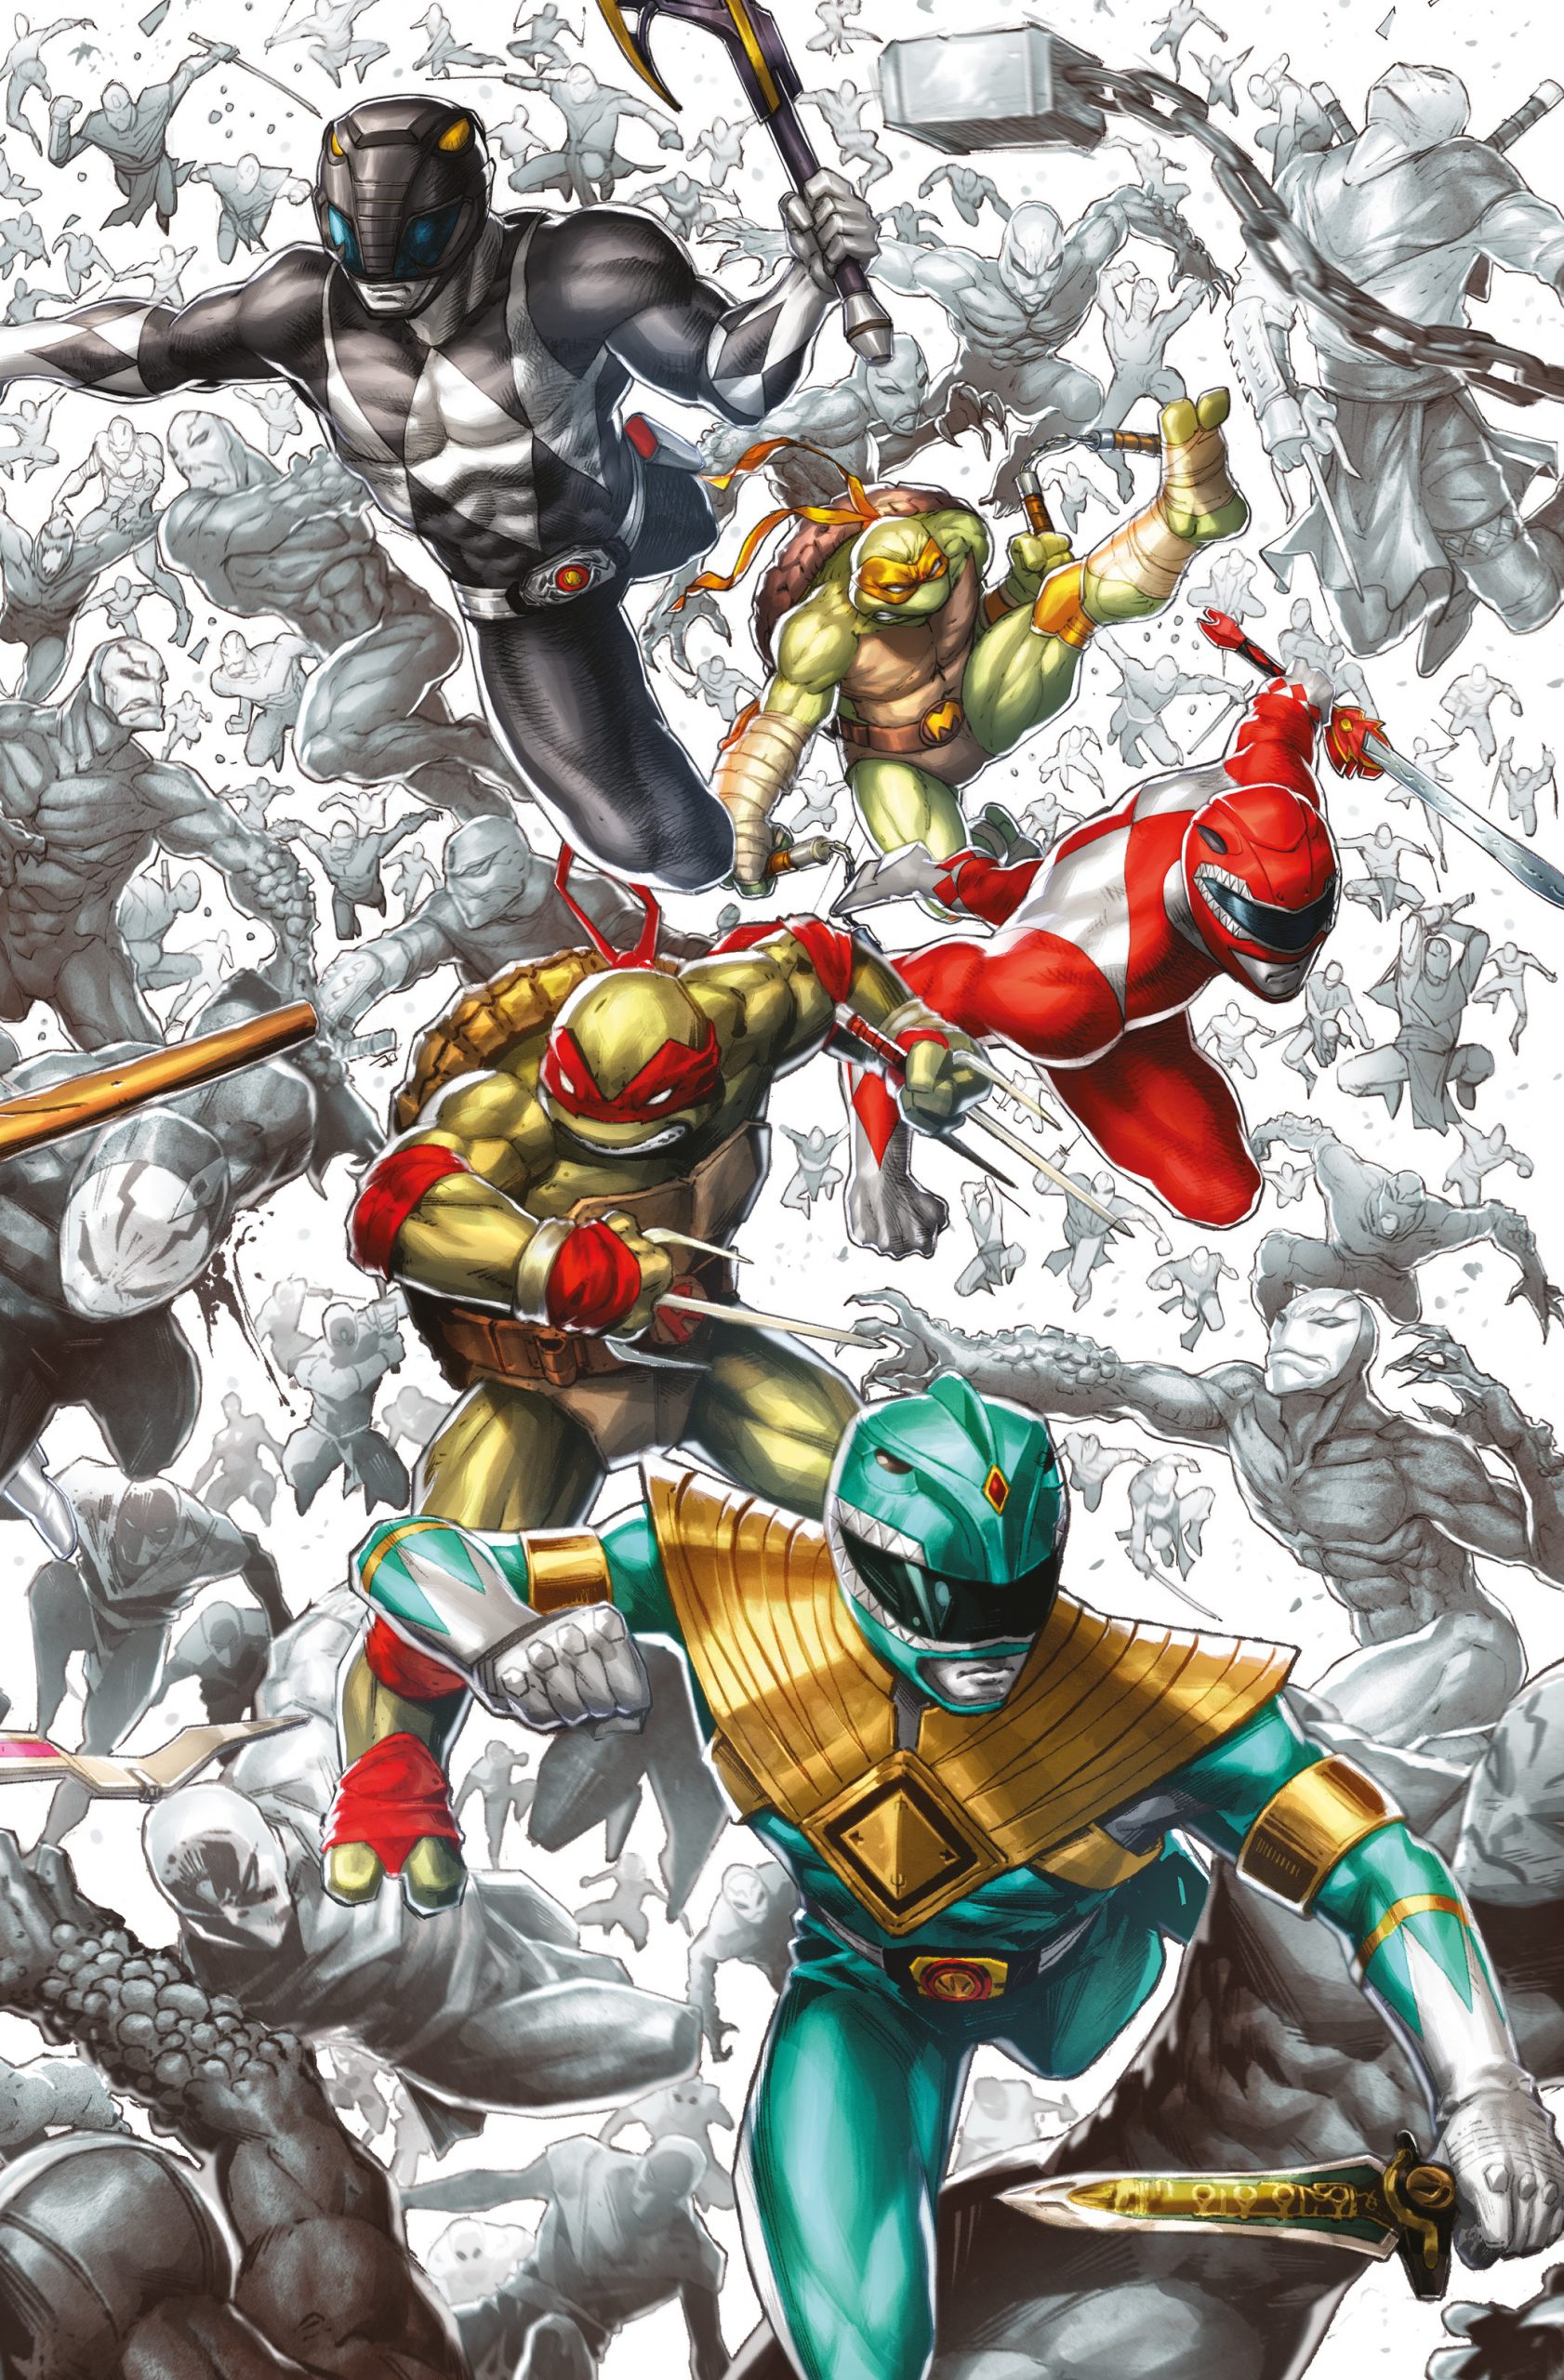 Mighty Morphin Power Rangers vs. Las Tortugas Ninja